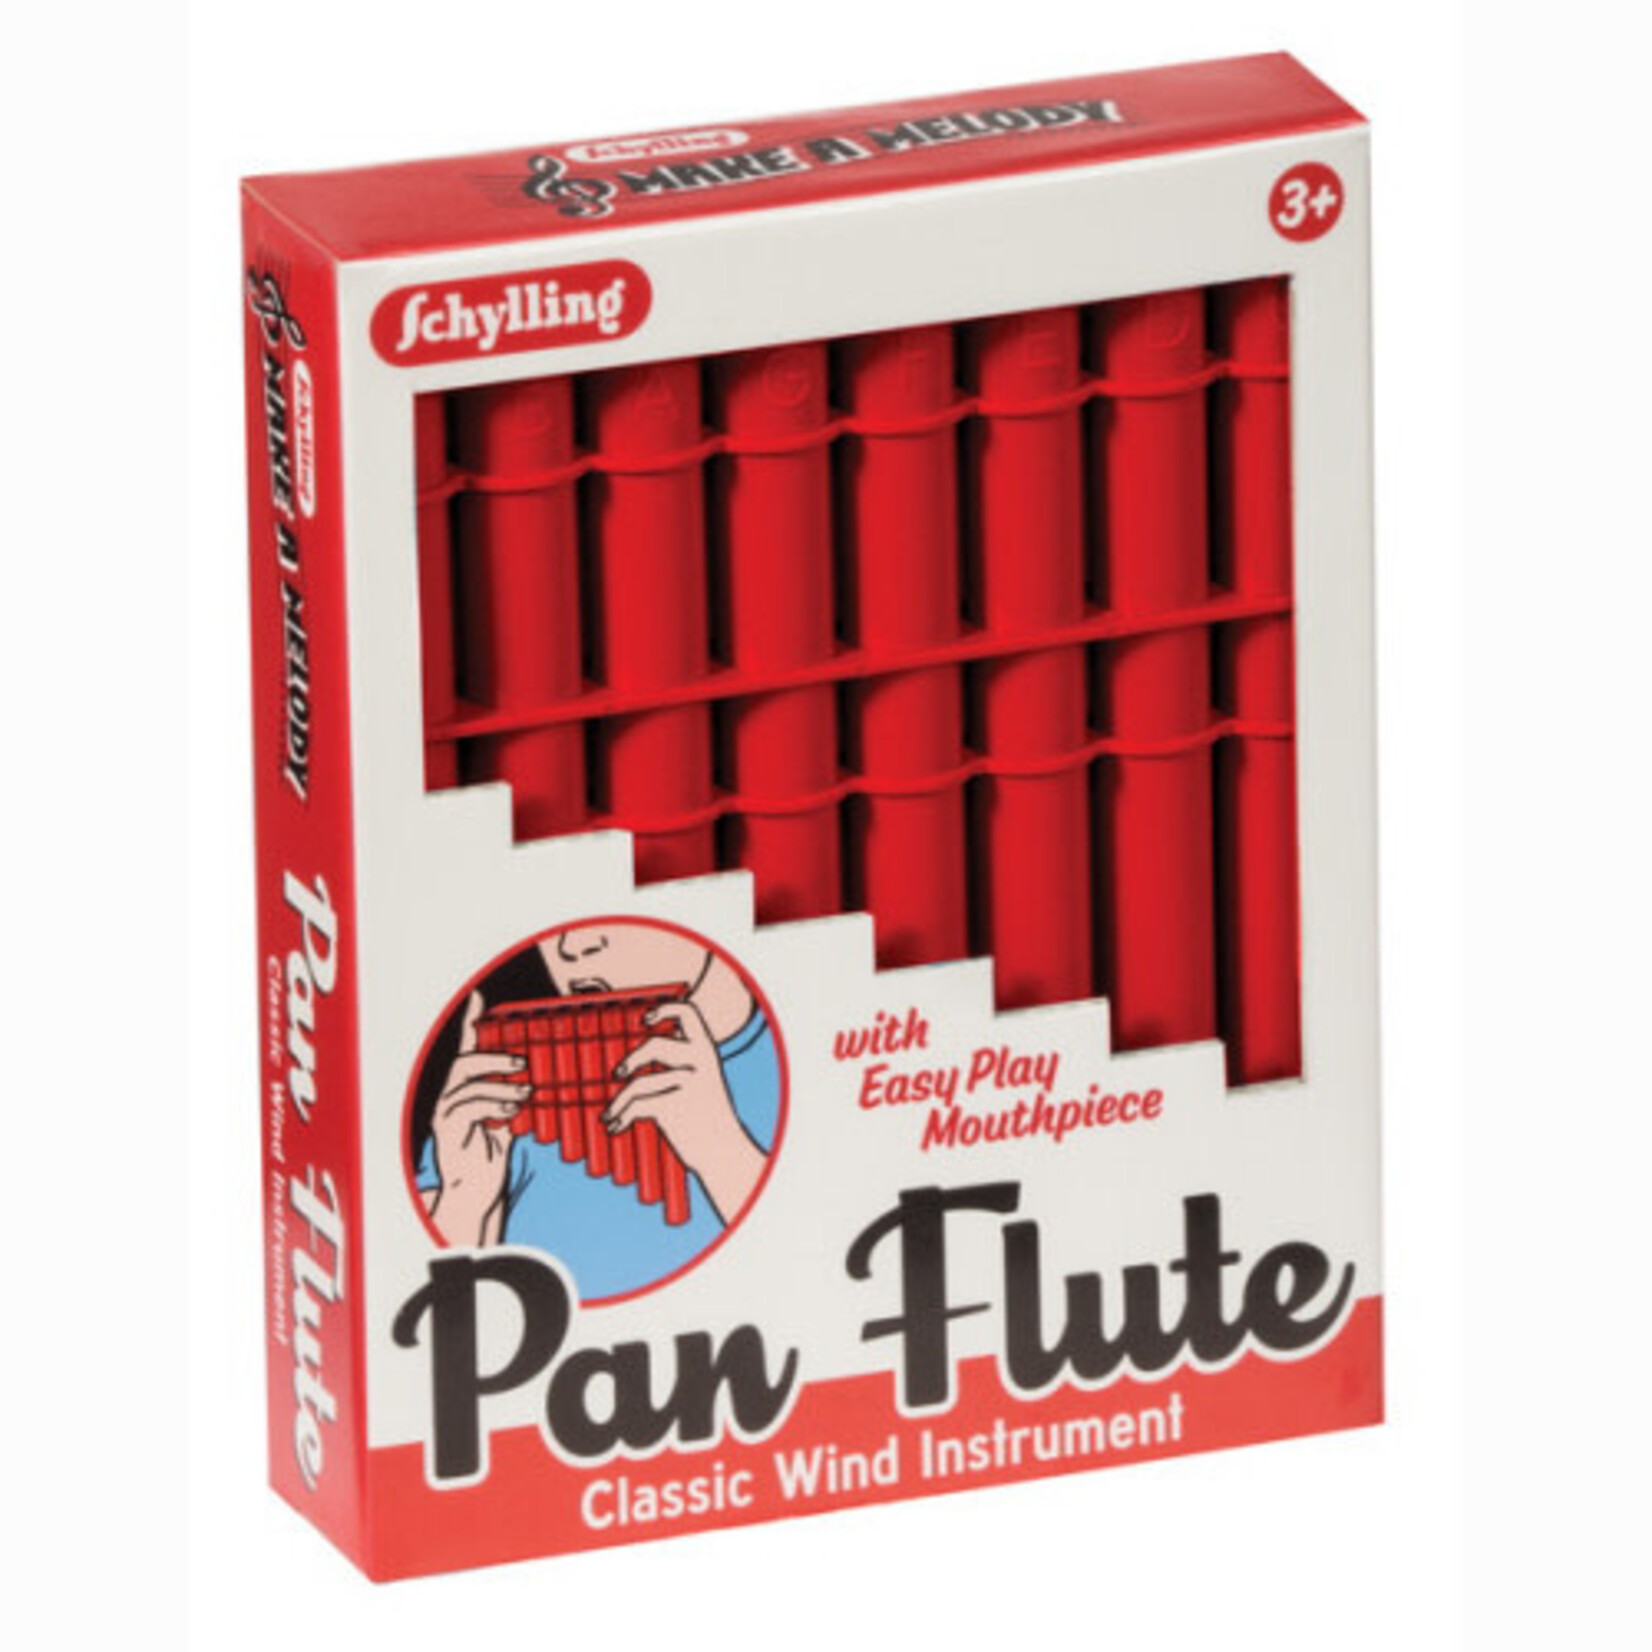 Pan Flute